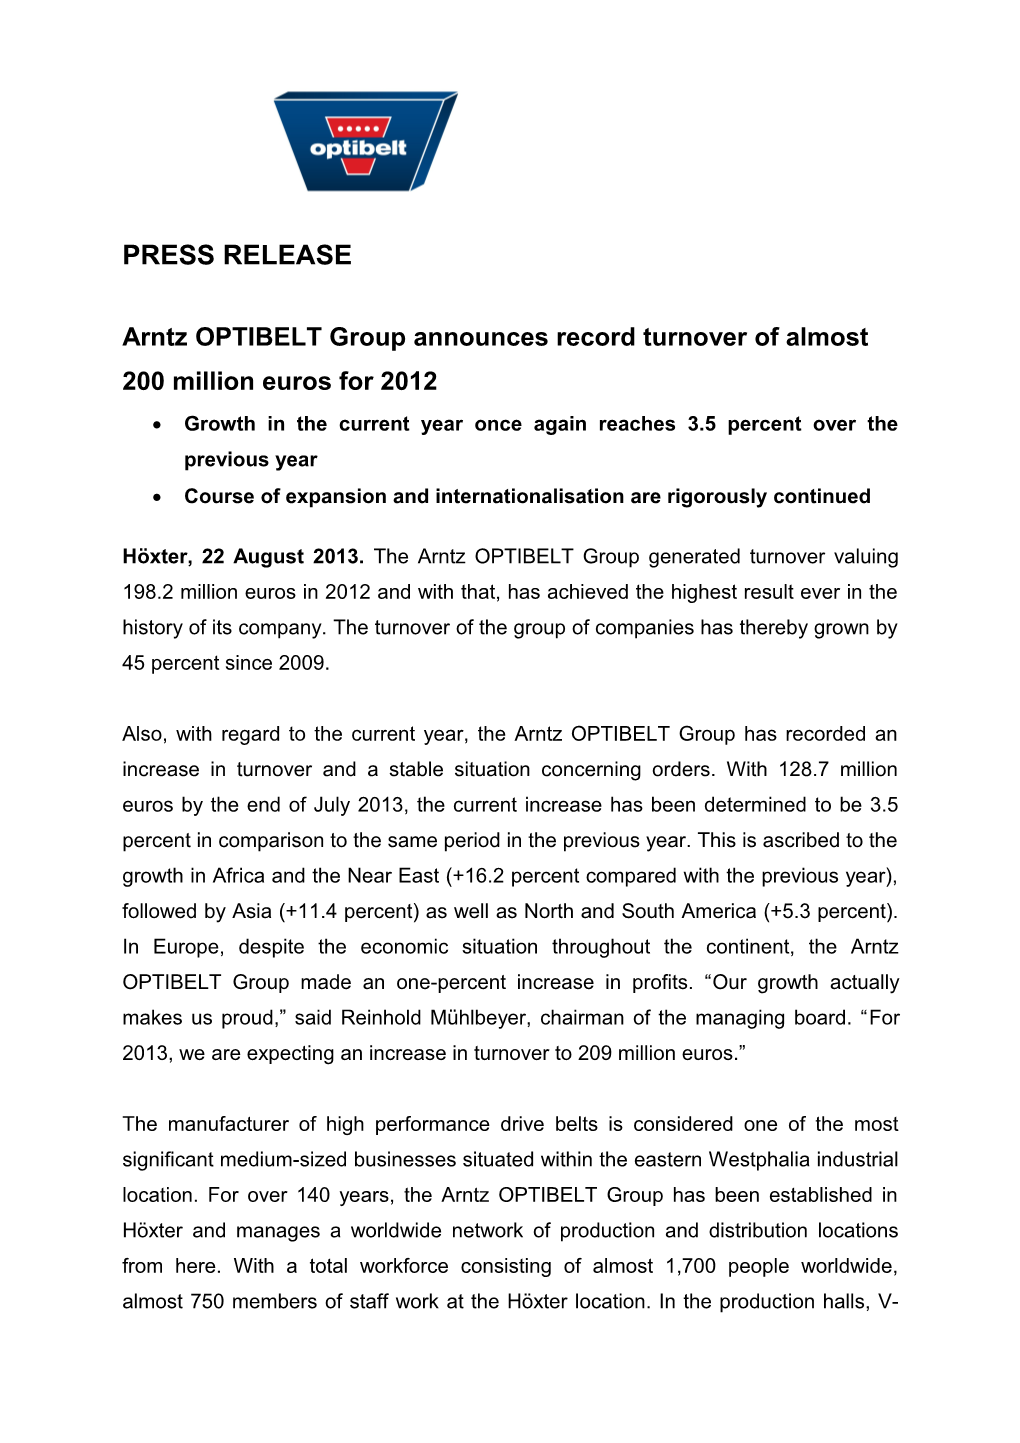 Arntz OPTIBELT Group Announces Record Turnover of Almost 200 Million Euros for 2012